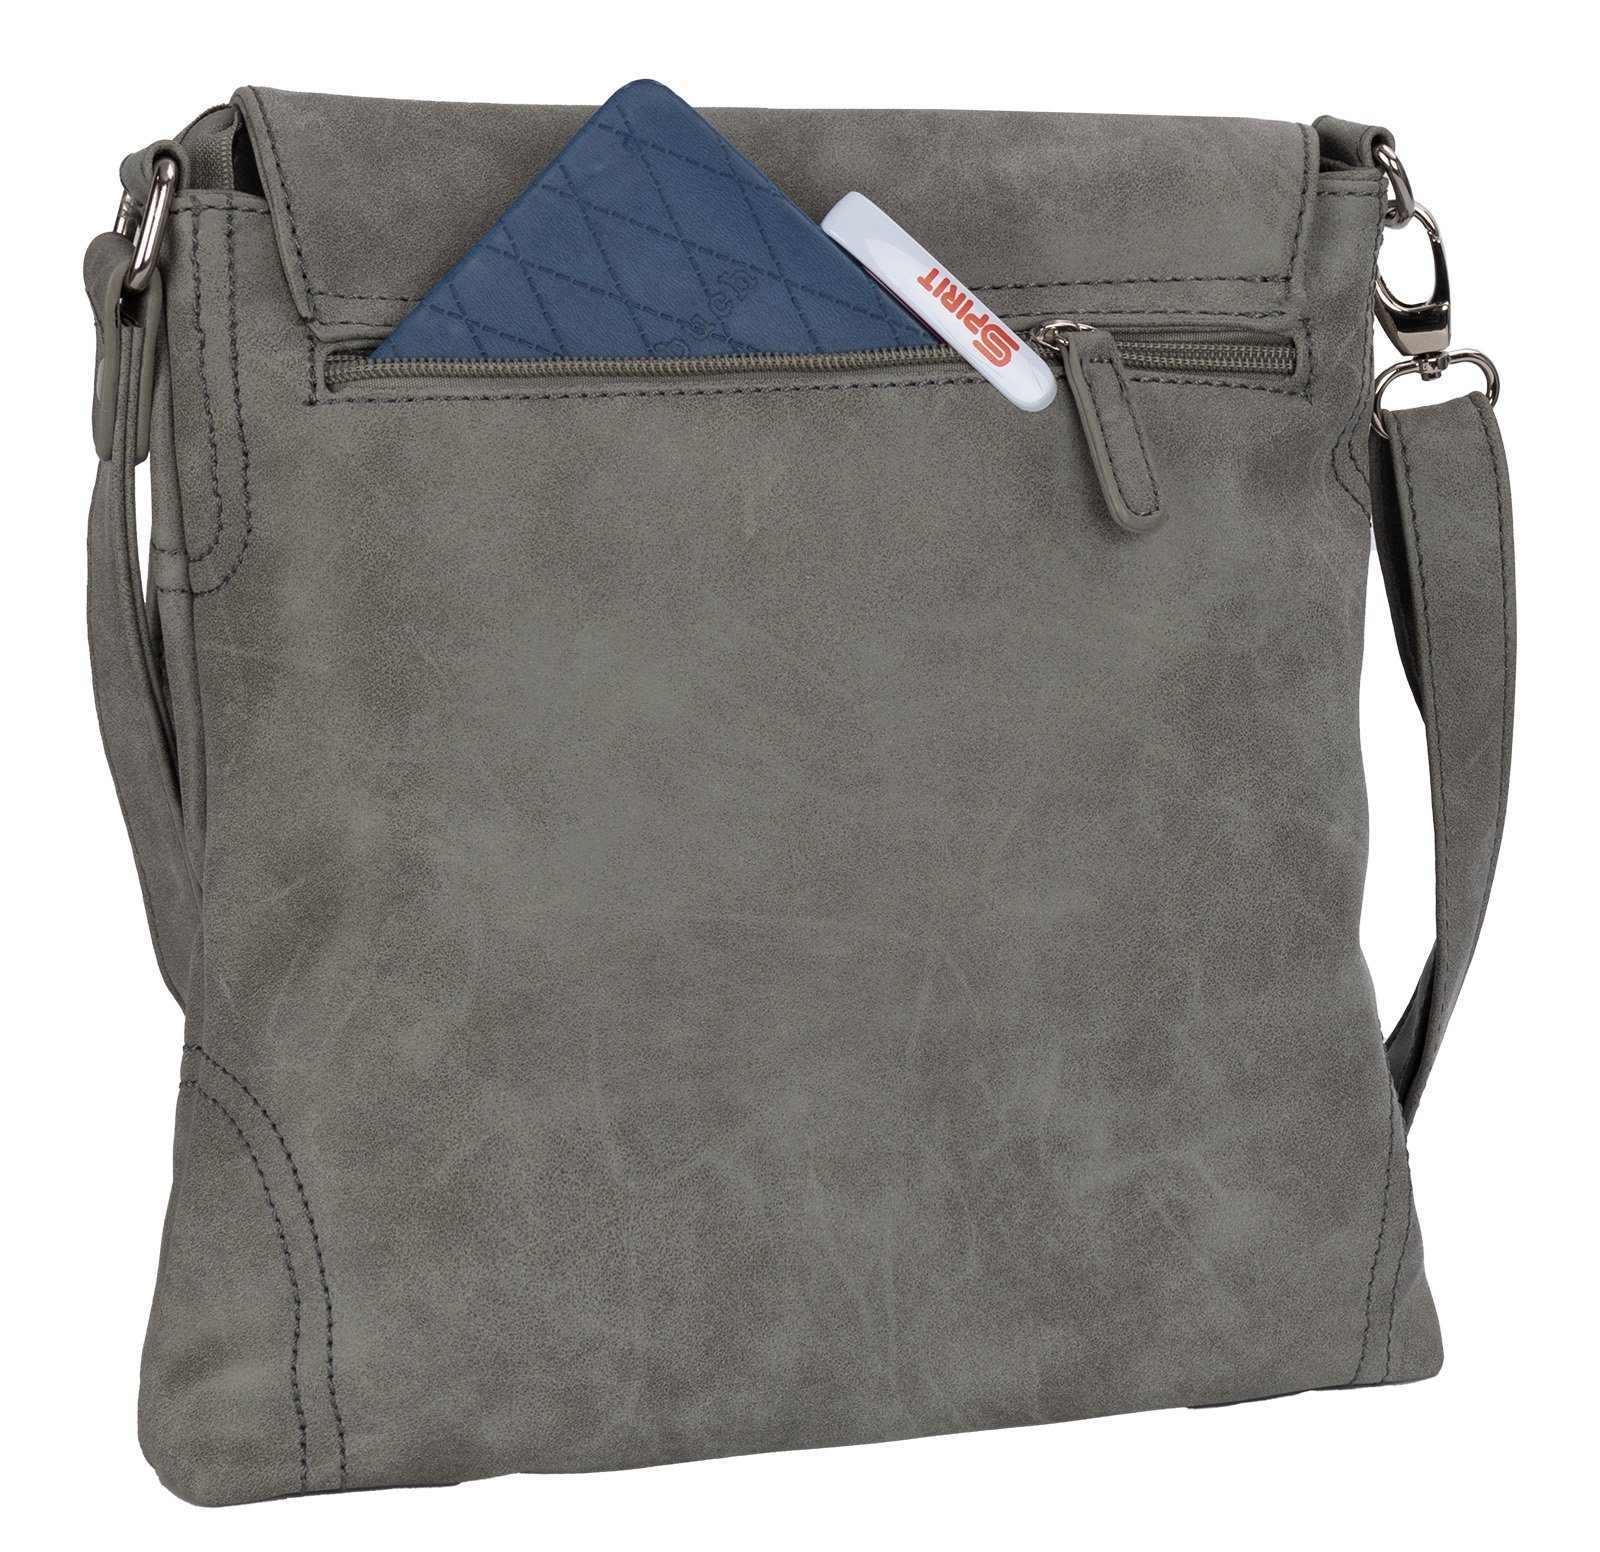 Damentasche BAG Bag Street tragbar Schultertasche T0104, Schlüsseltasche Umhängetasche als Schultertasche, STREET Umhängetasche Handtasche GRAU